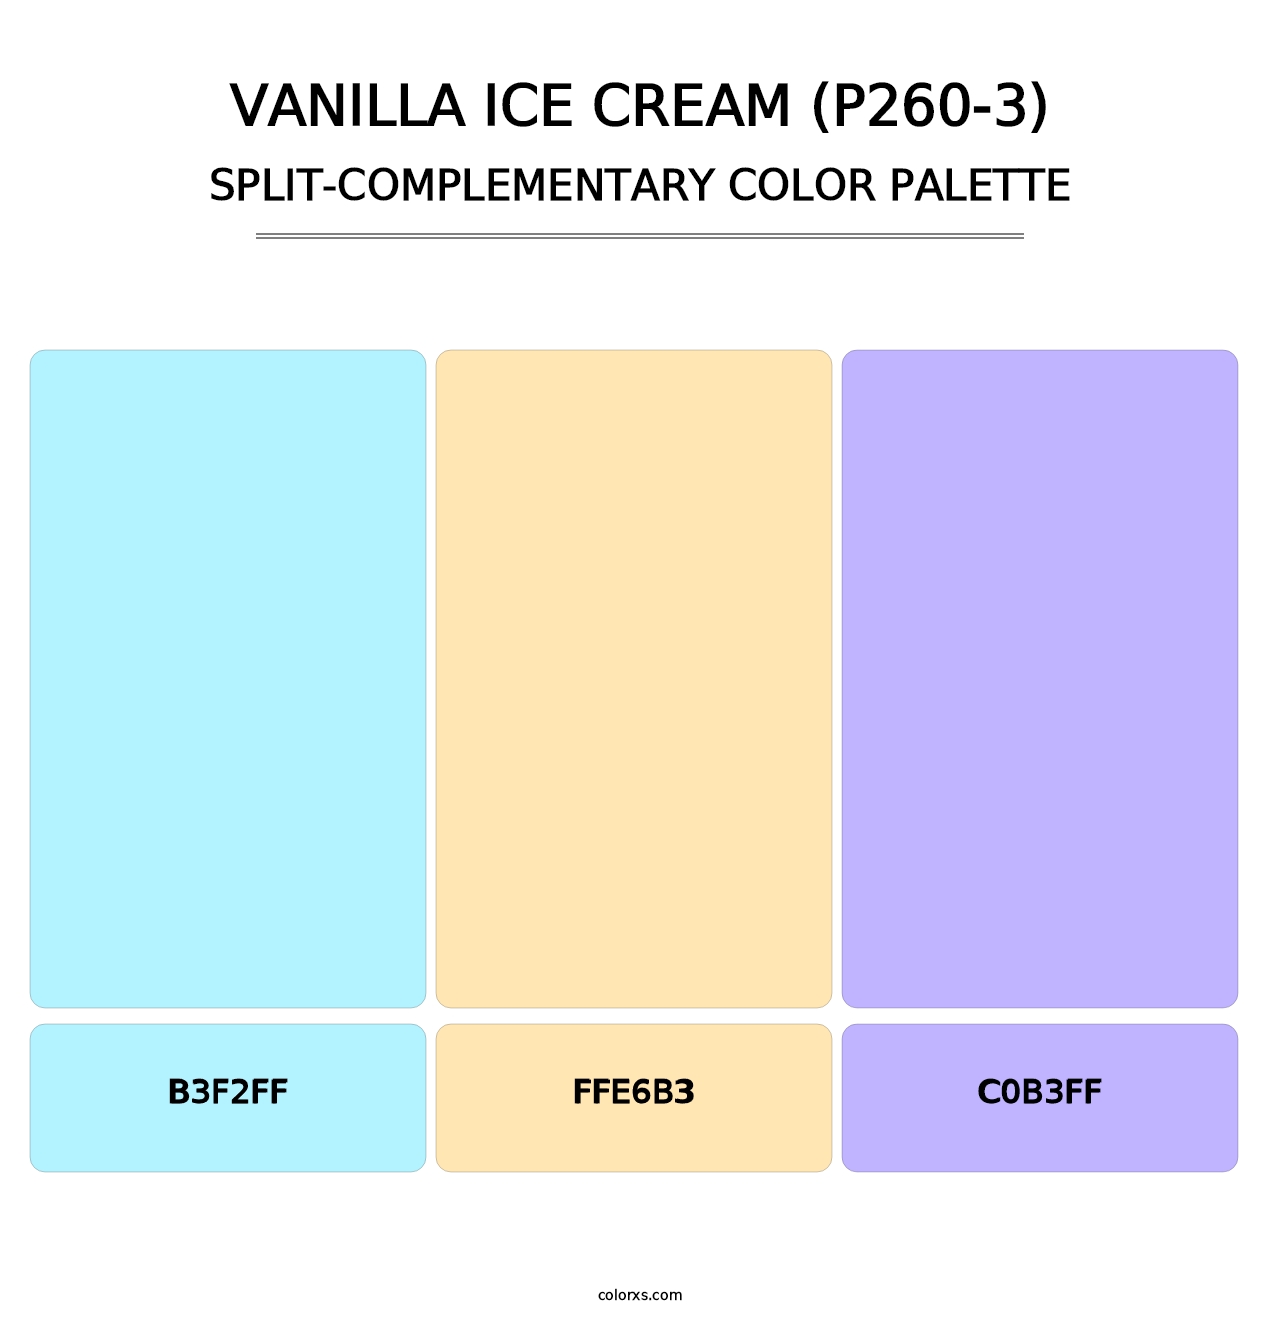 Vanilla Ice Cream (P260-3) - Split-Complementary Color Palette